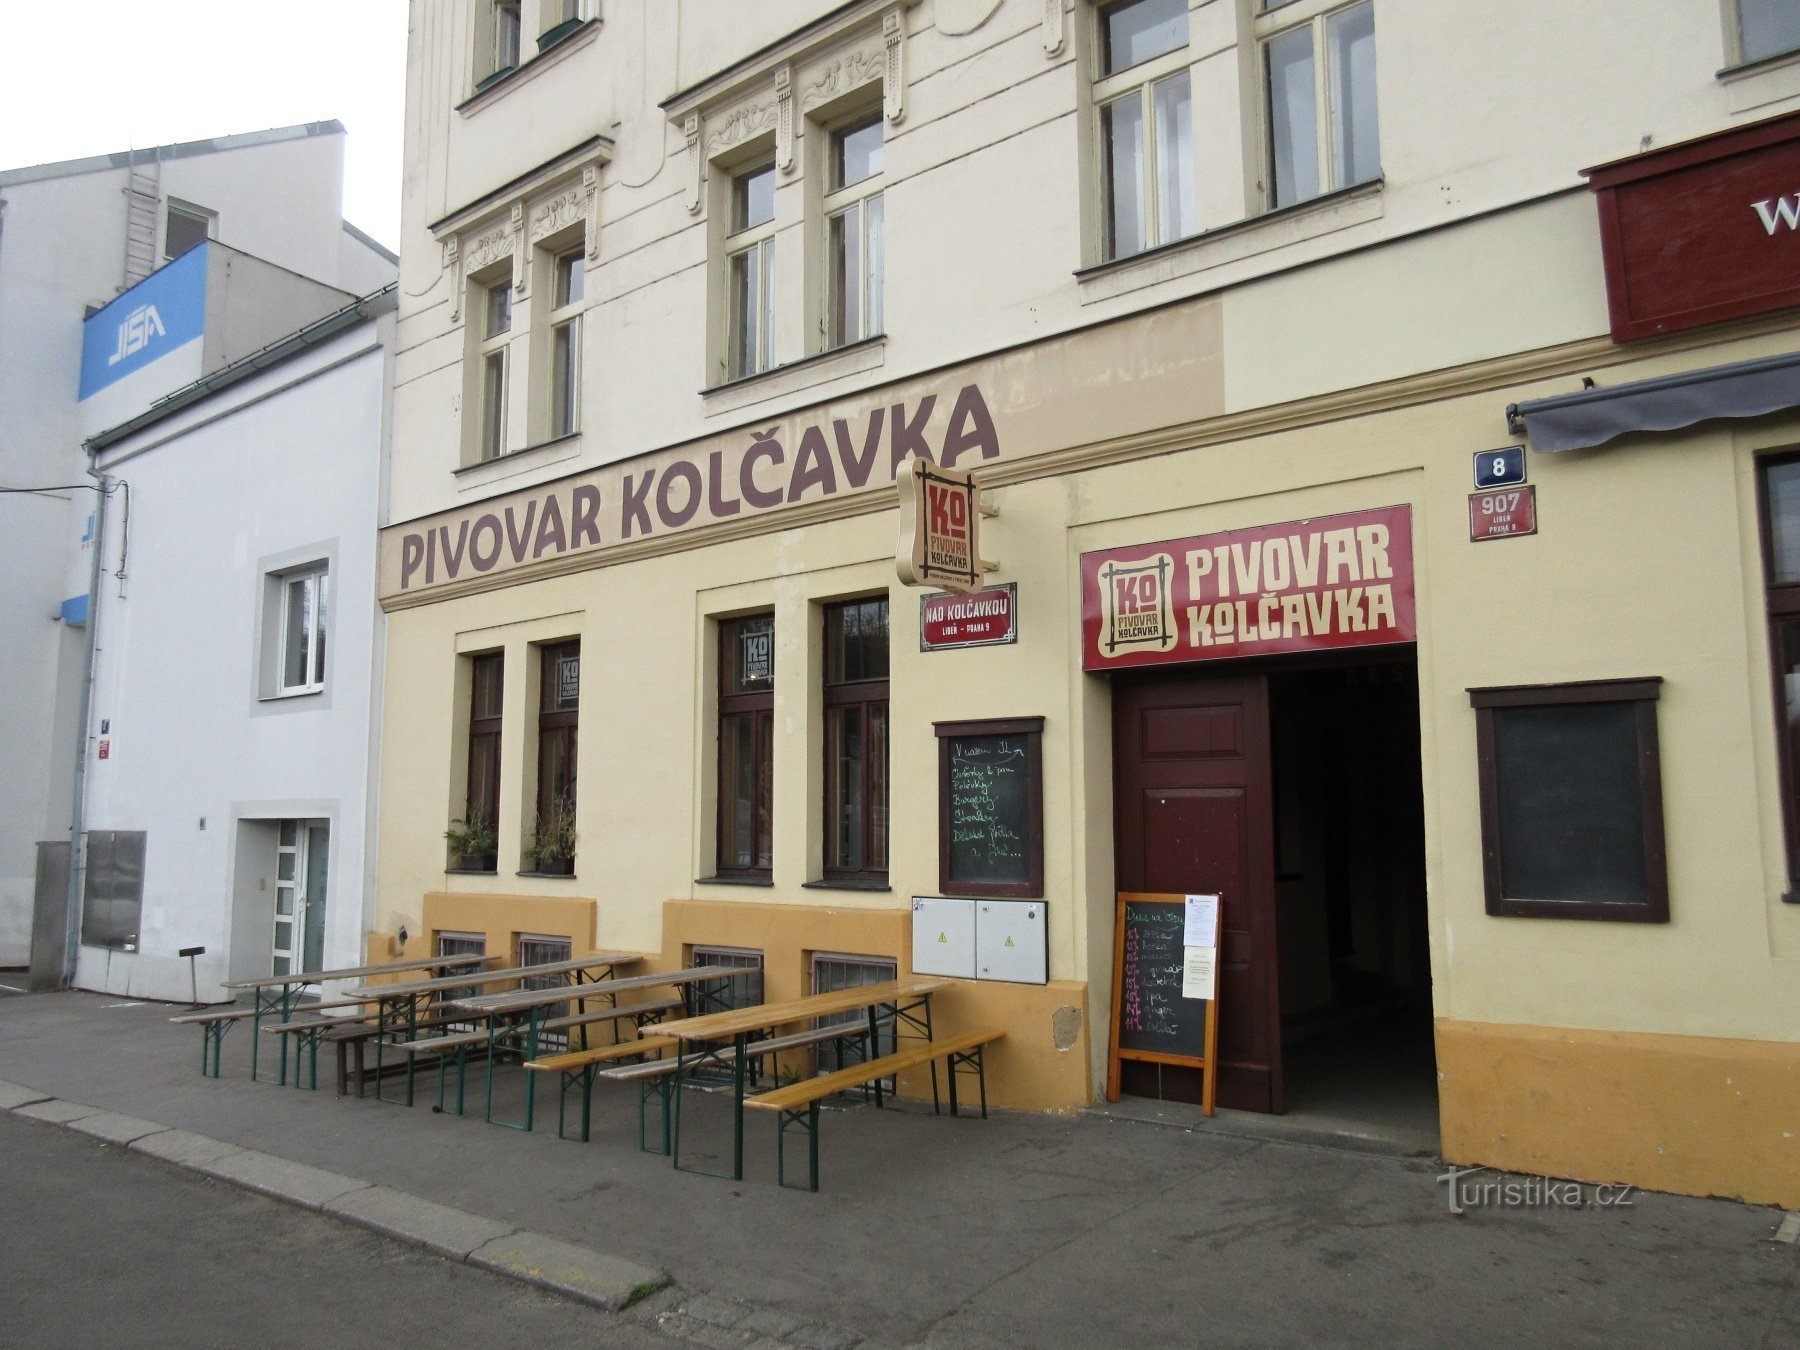 Kolčavka-bryggeriet i Nad Kolčavkou-gaden